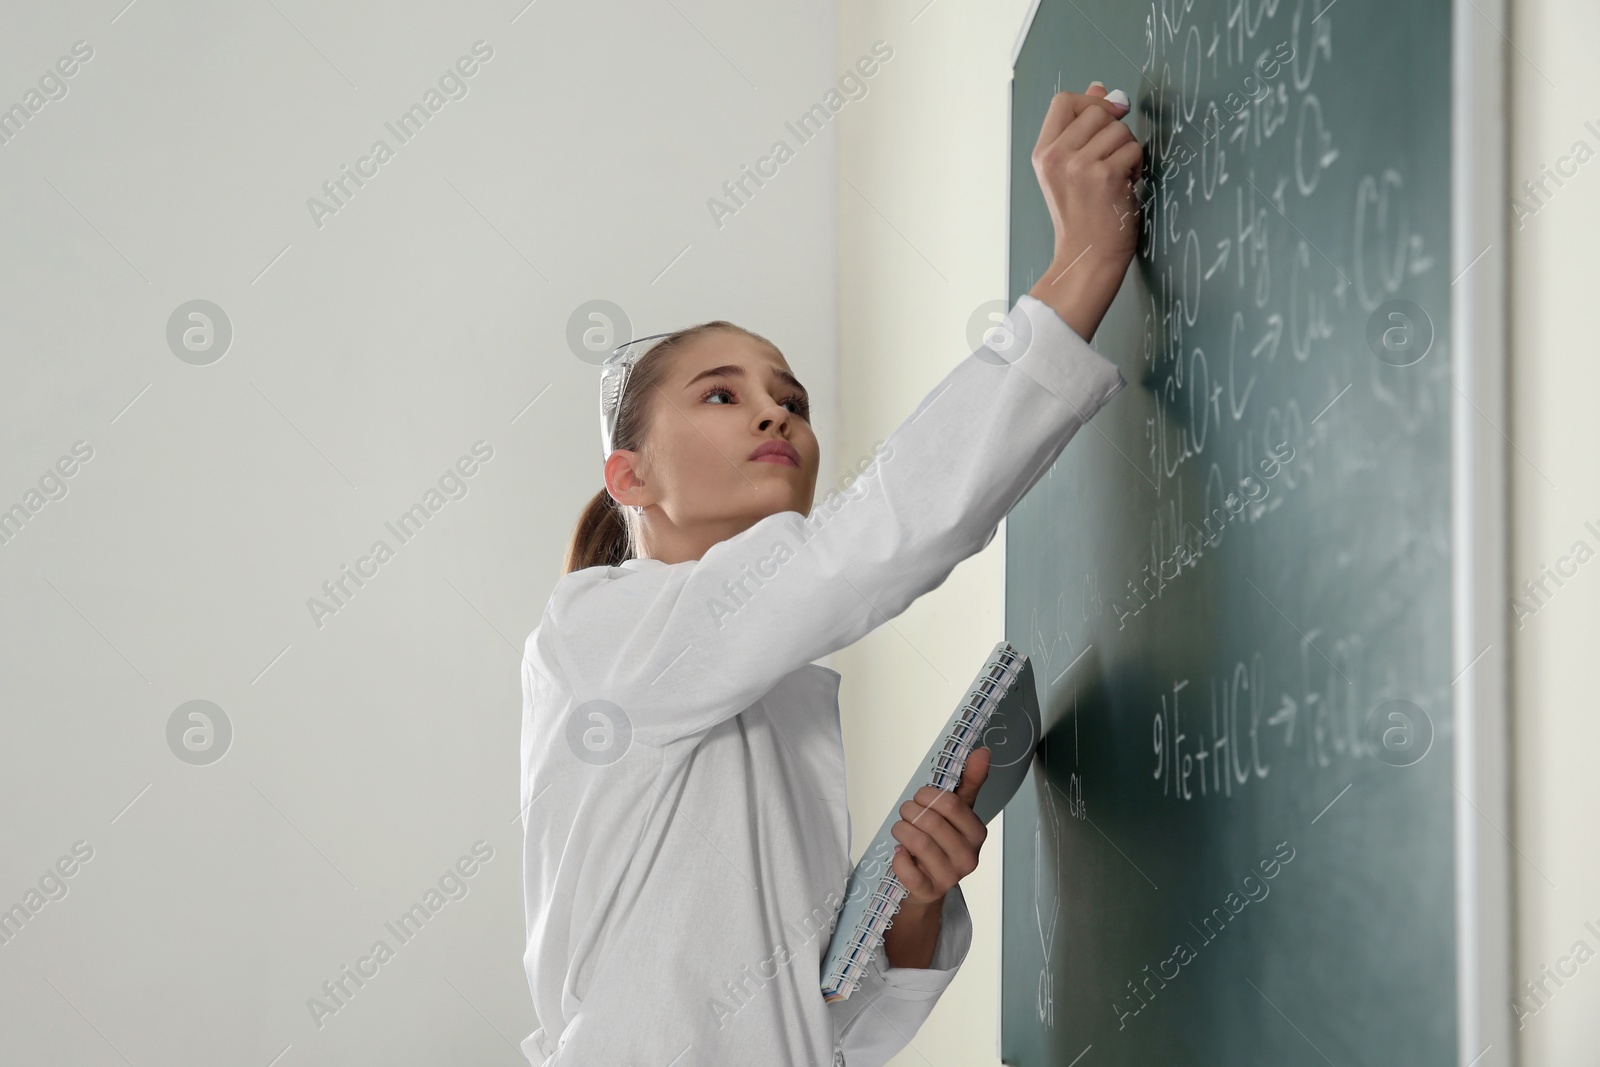 Photo of Schoolgirl writing chemistry formula on blackboard in class